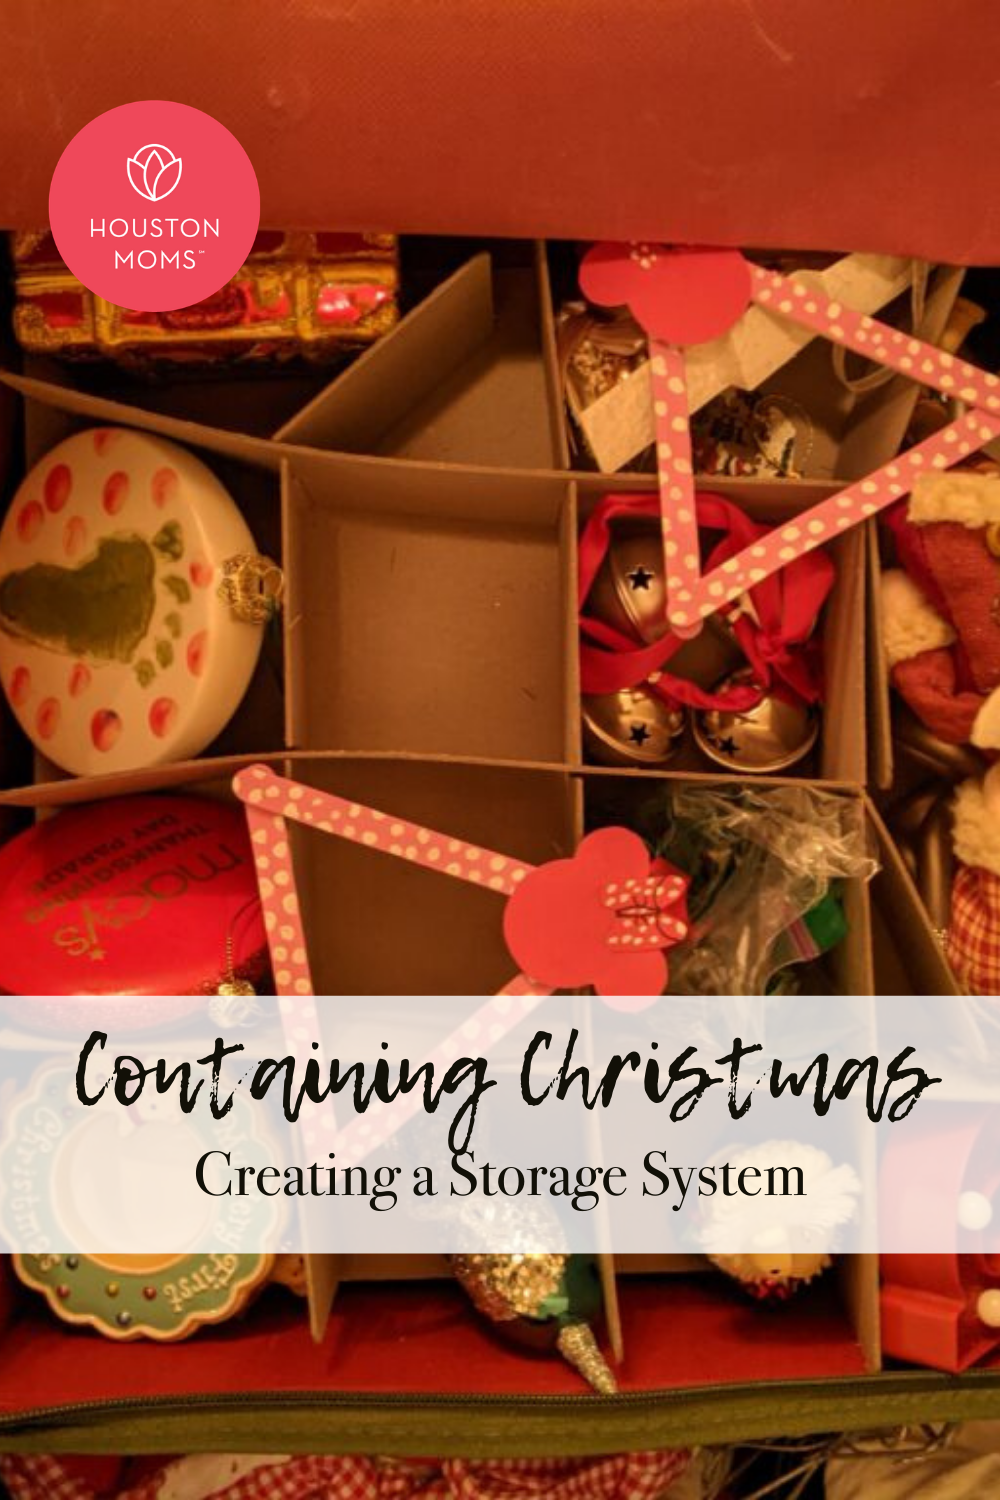 Houston Moms "Containing Christmas:: Creating a Storage System" #houstonmoms #houstonmomsblog #momsaroundhouston